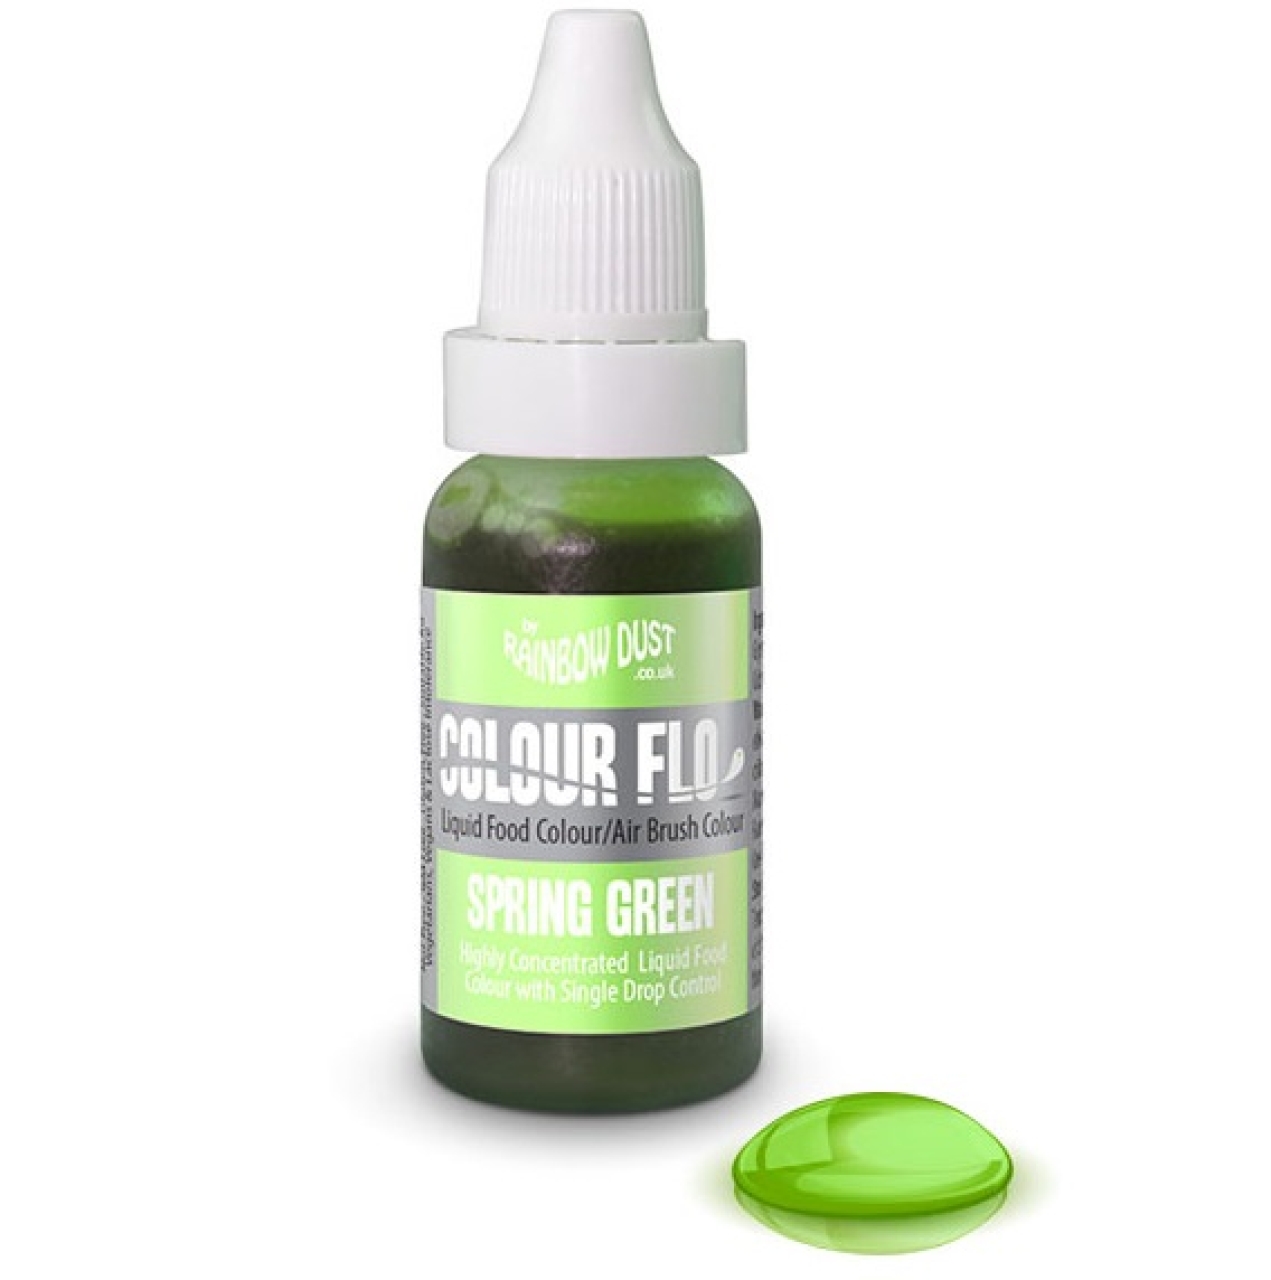 RD Colour Flo Airbrush flüssige Lebensmittelfarbe 19 g, grün